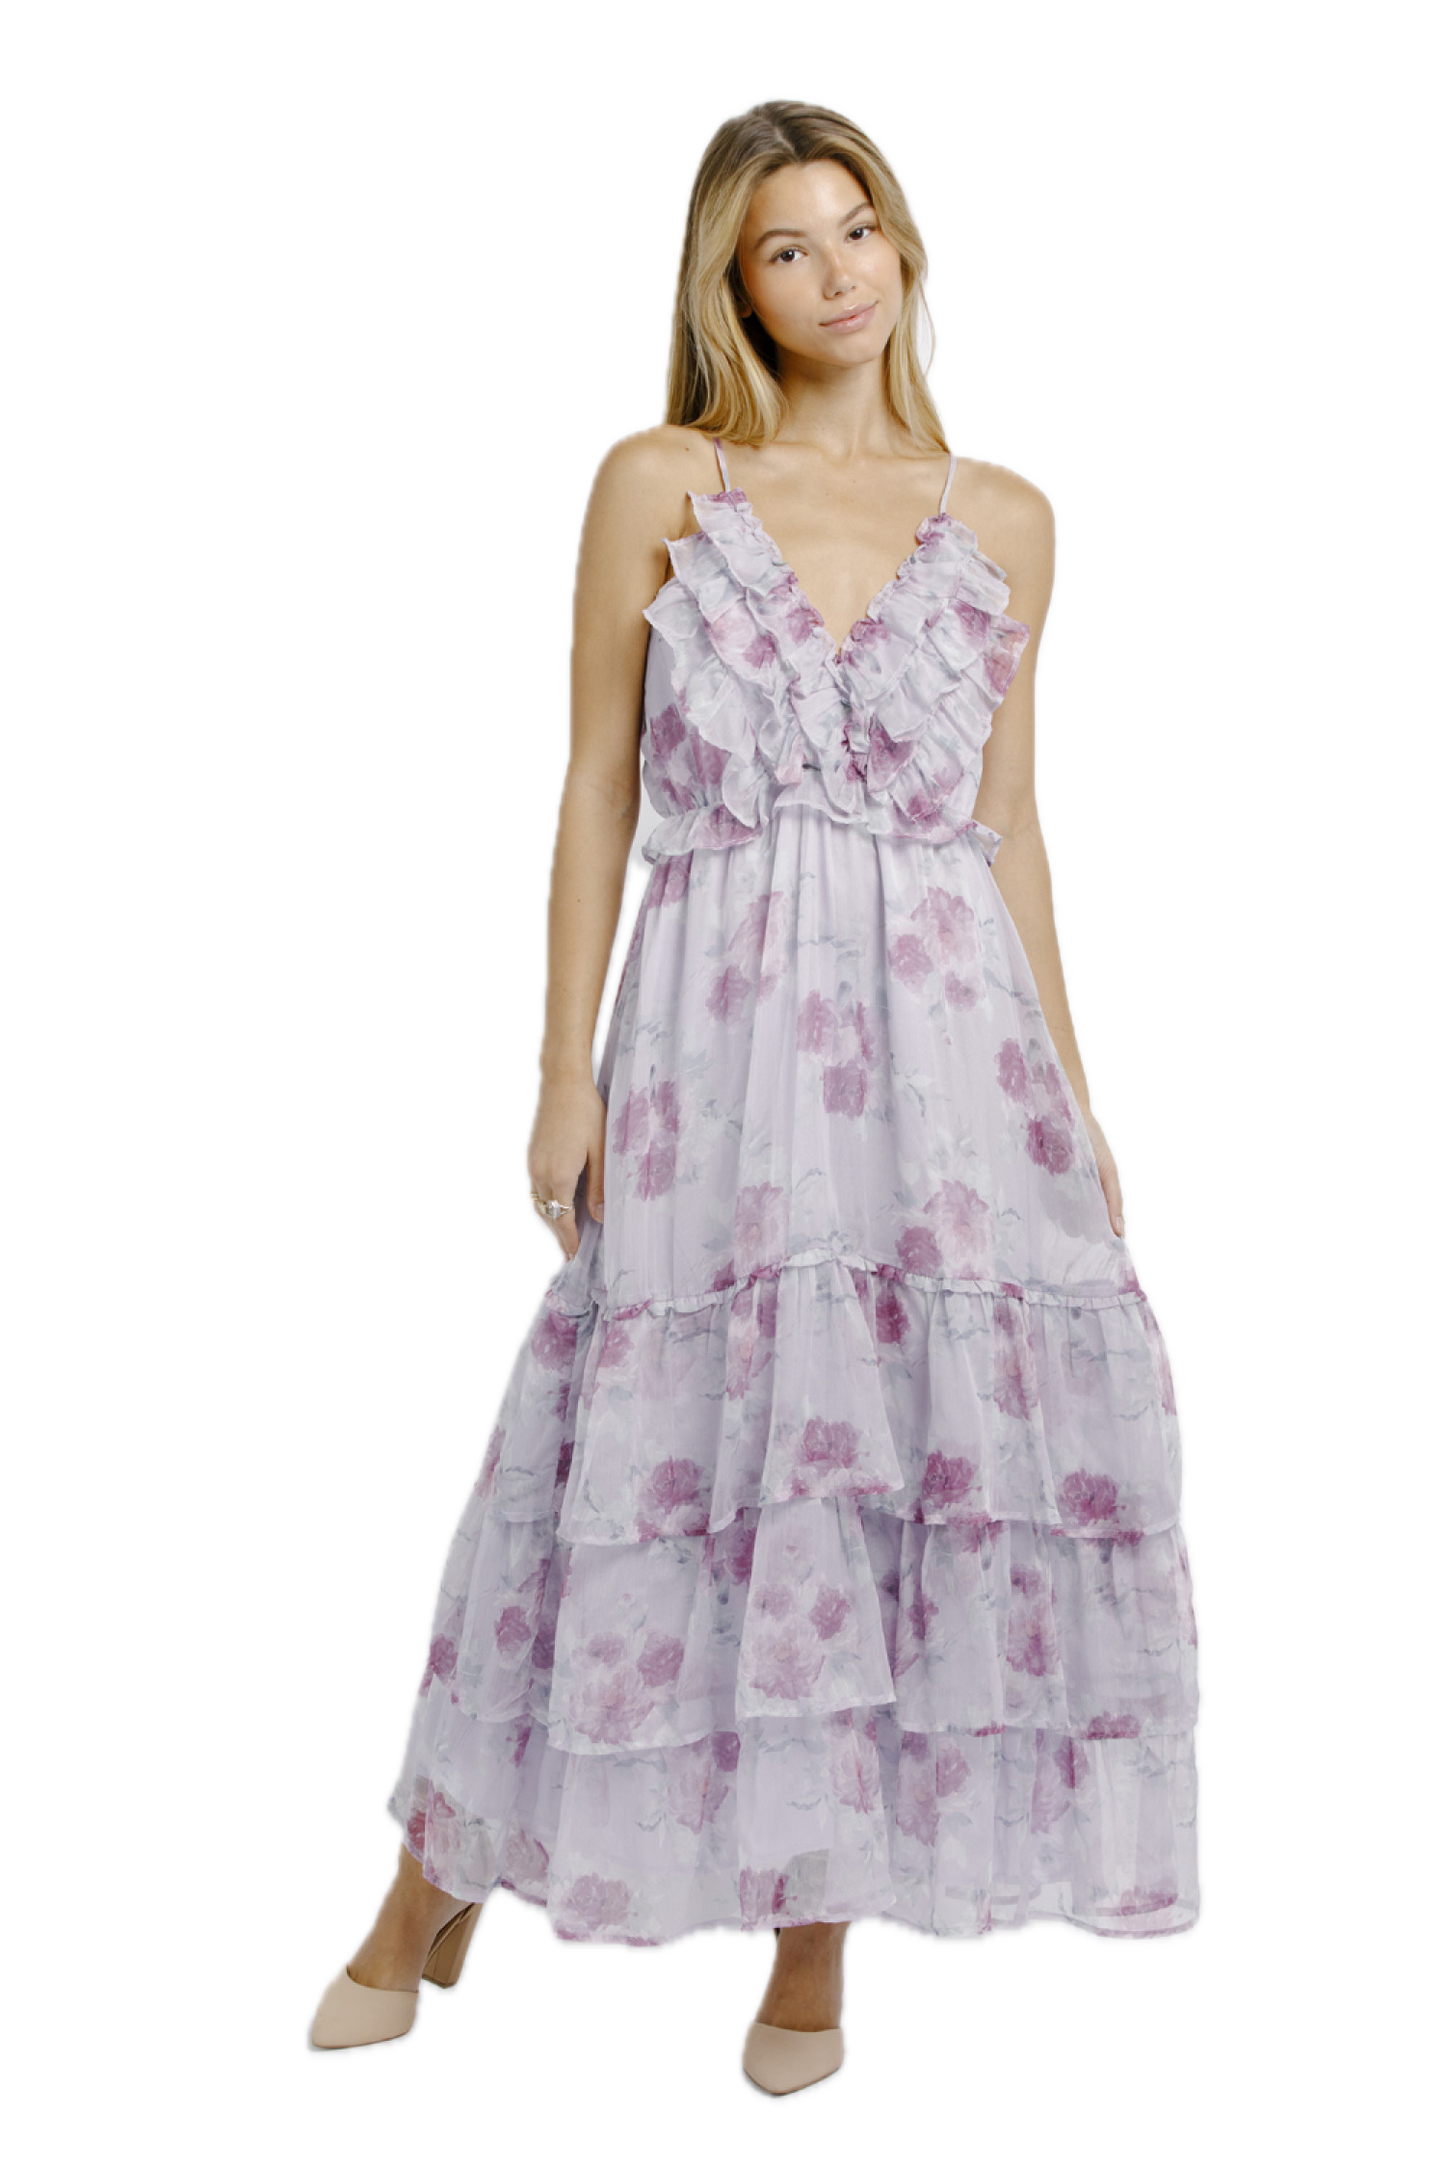 Purple Floral Maxi Dress